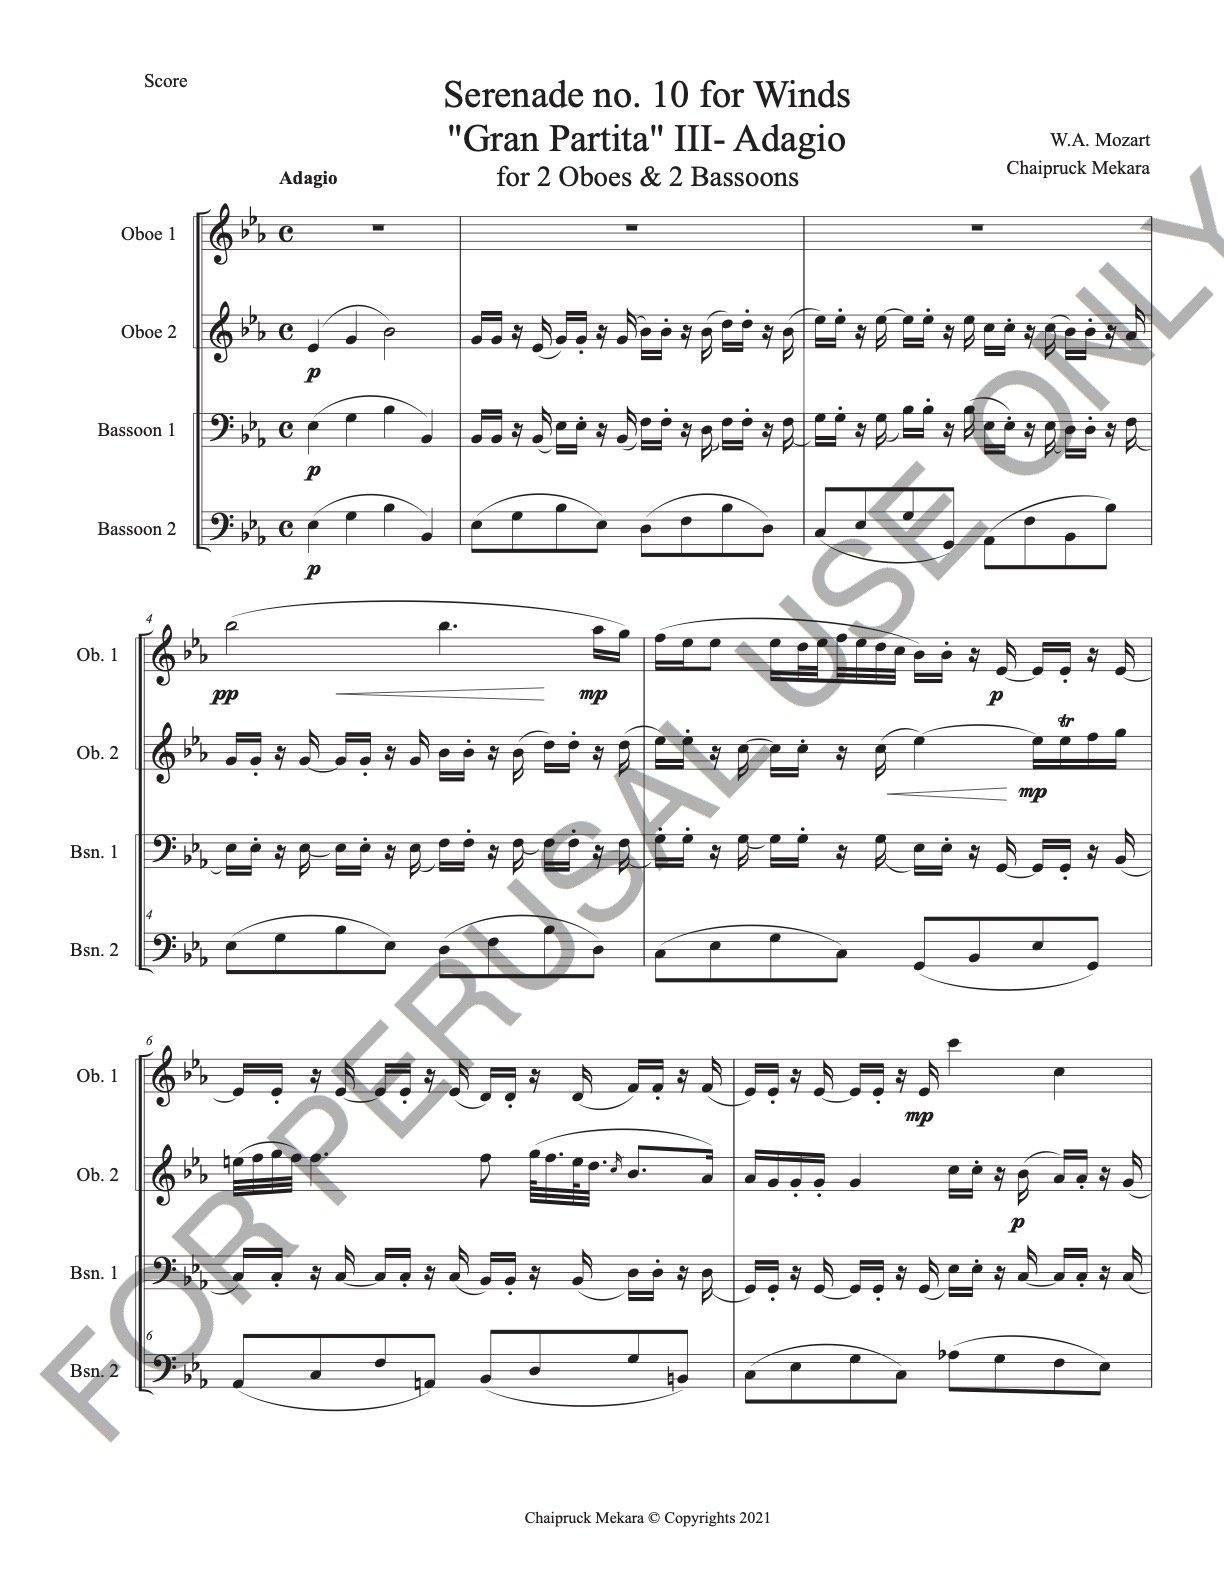 Mozart's Serenade no. 10 for Winds: 2 Oboes & 2 Bassoons transcription - ChaipruckMekara